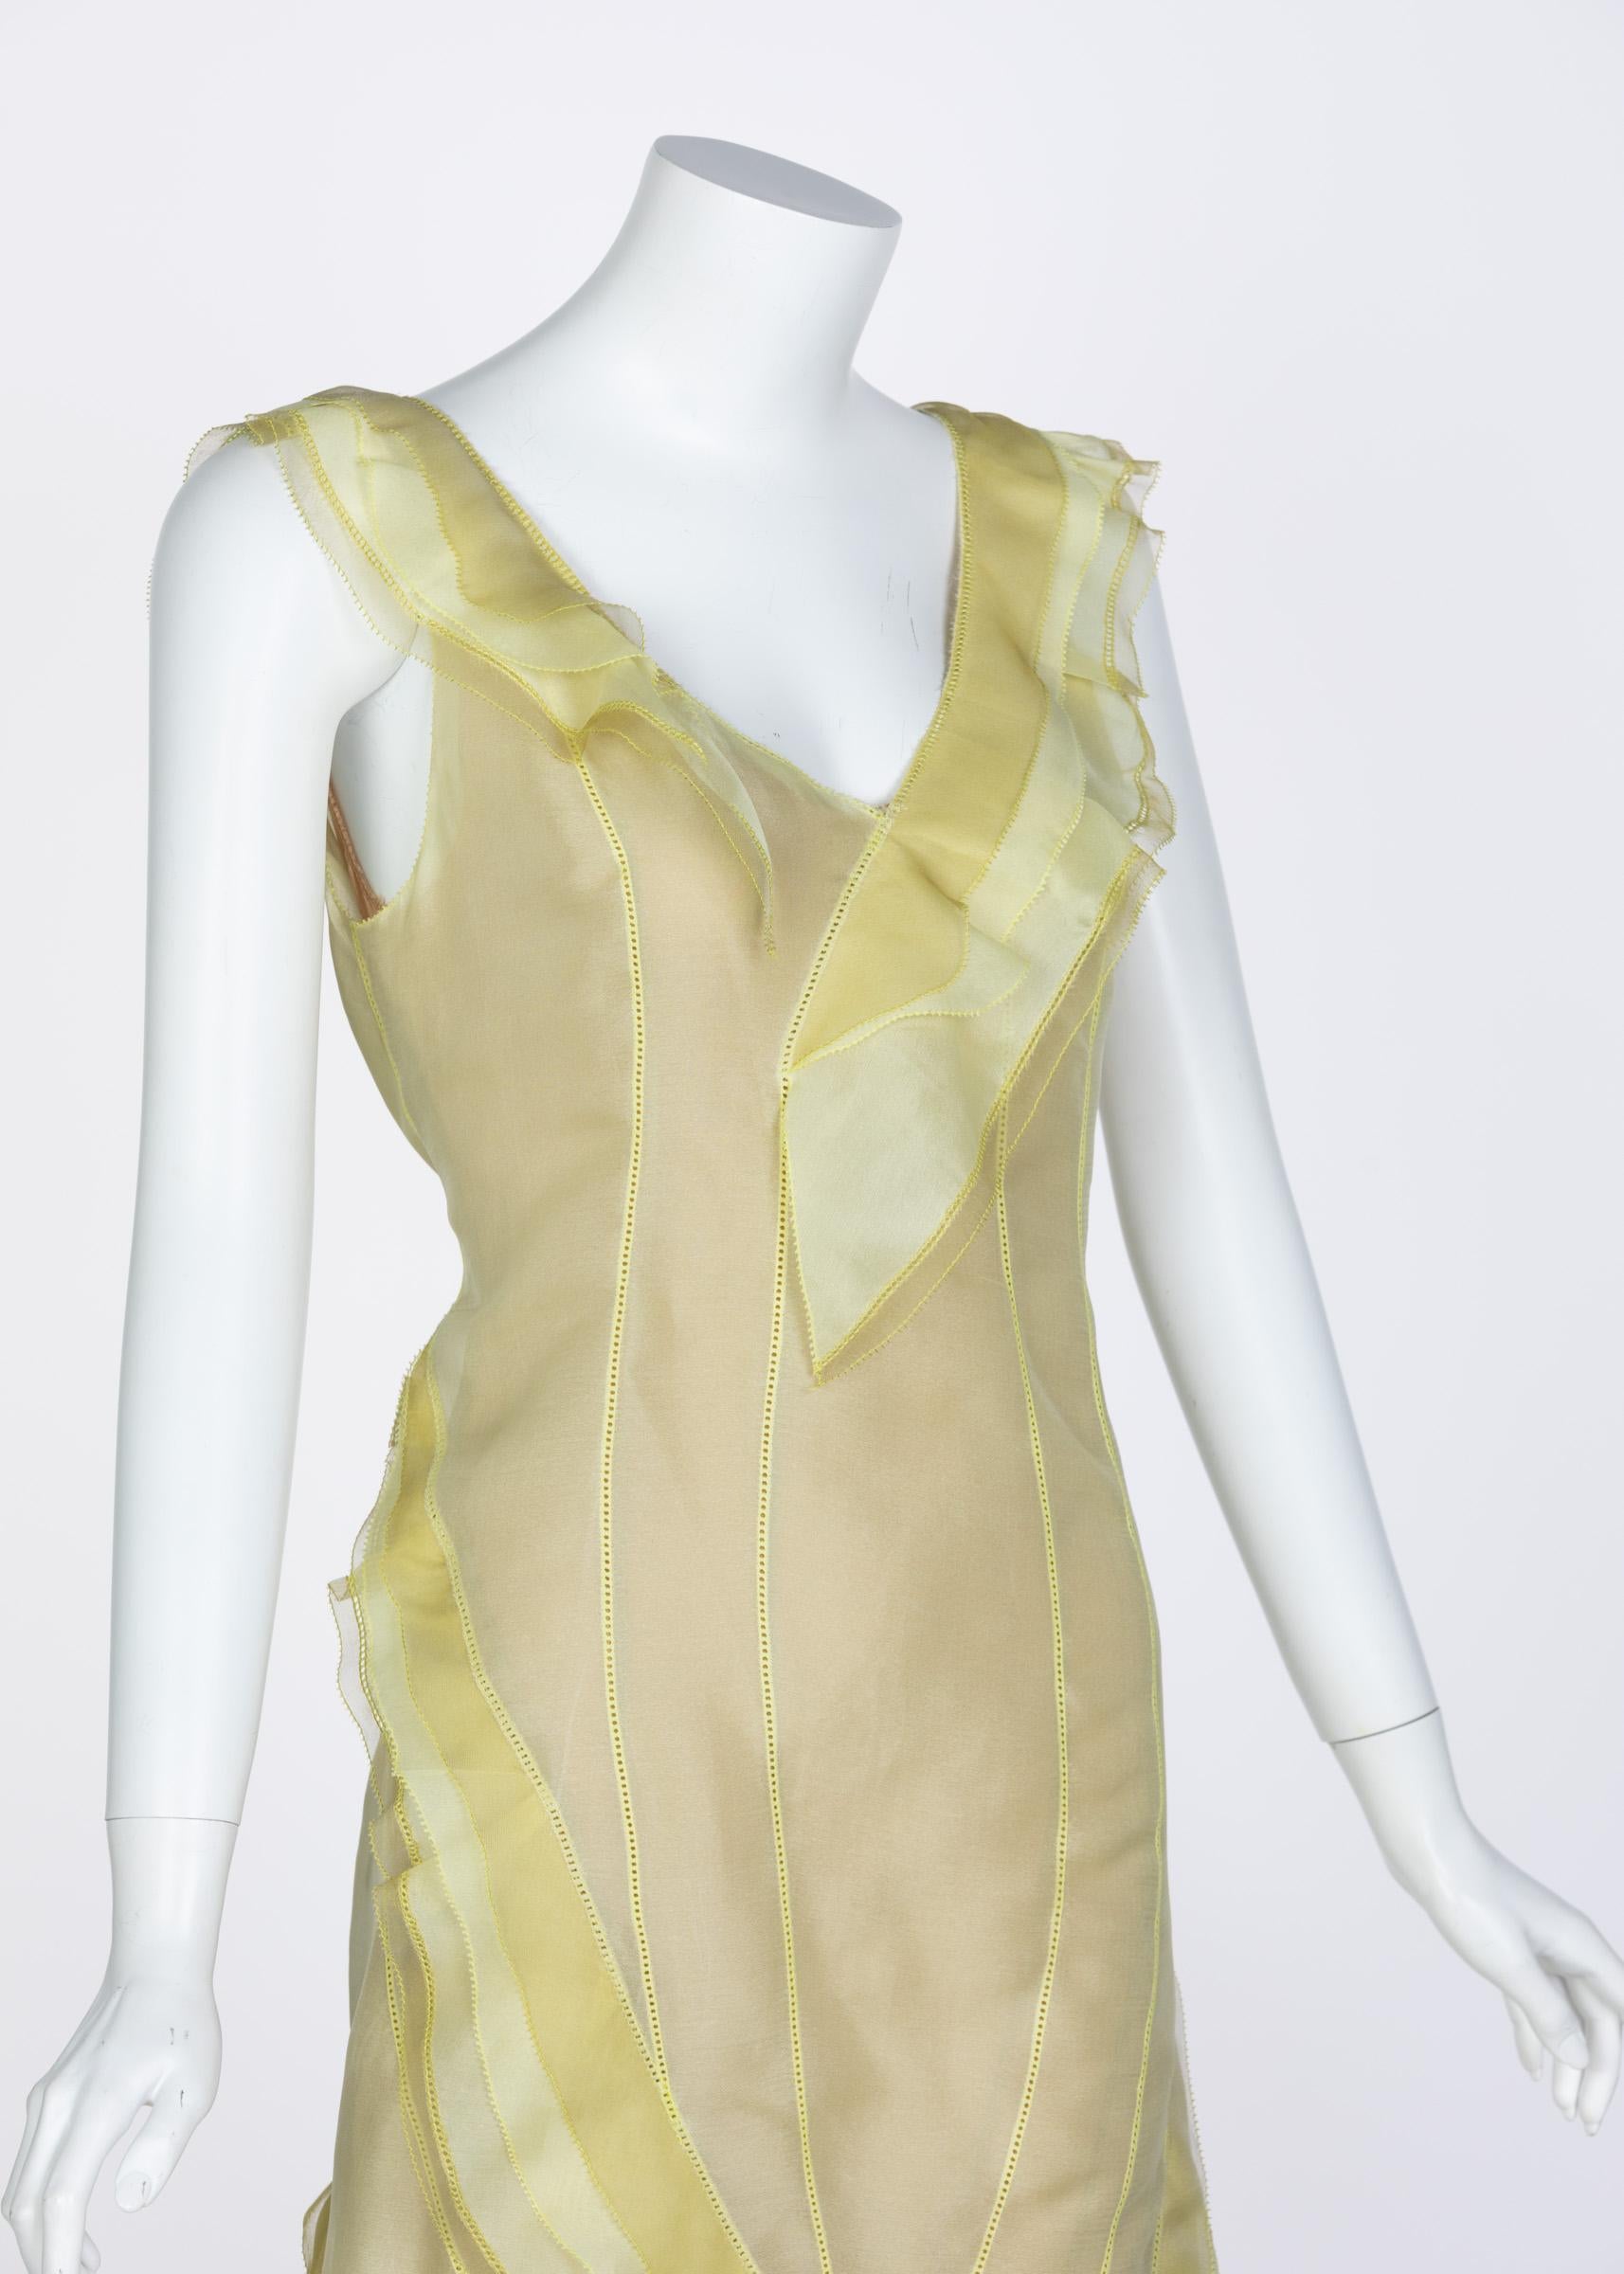 Women's Nina Ricci Yellow Silk Organza Sleeveless Evening Dress, 2009